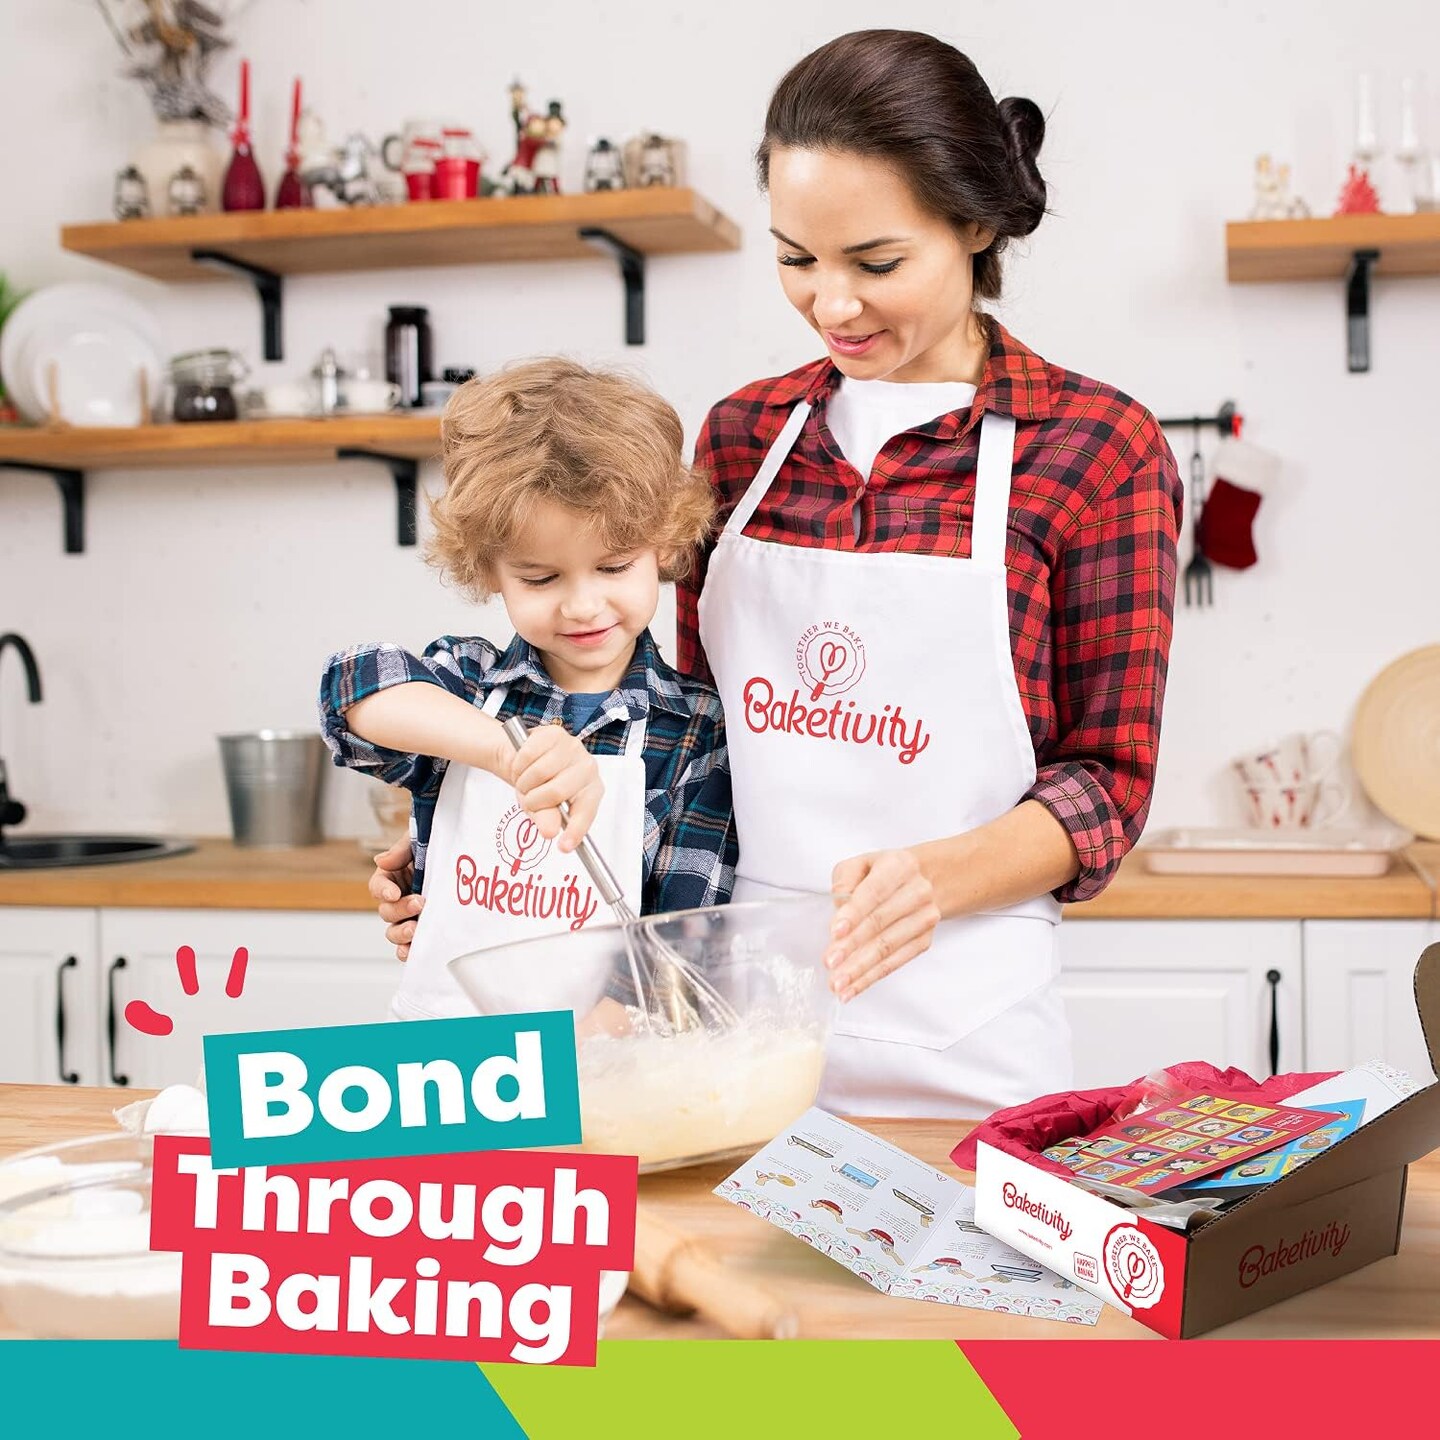 BAKETIVITY Kids Baking DIY Activity Kit - Bake Delicious Yum&#x26;m Jumbo Cookies- Real Fun Little Junior Chef Essential Kitchen Lessons